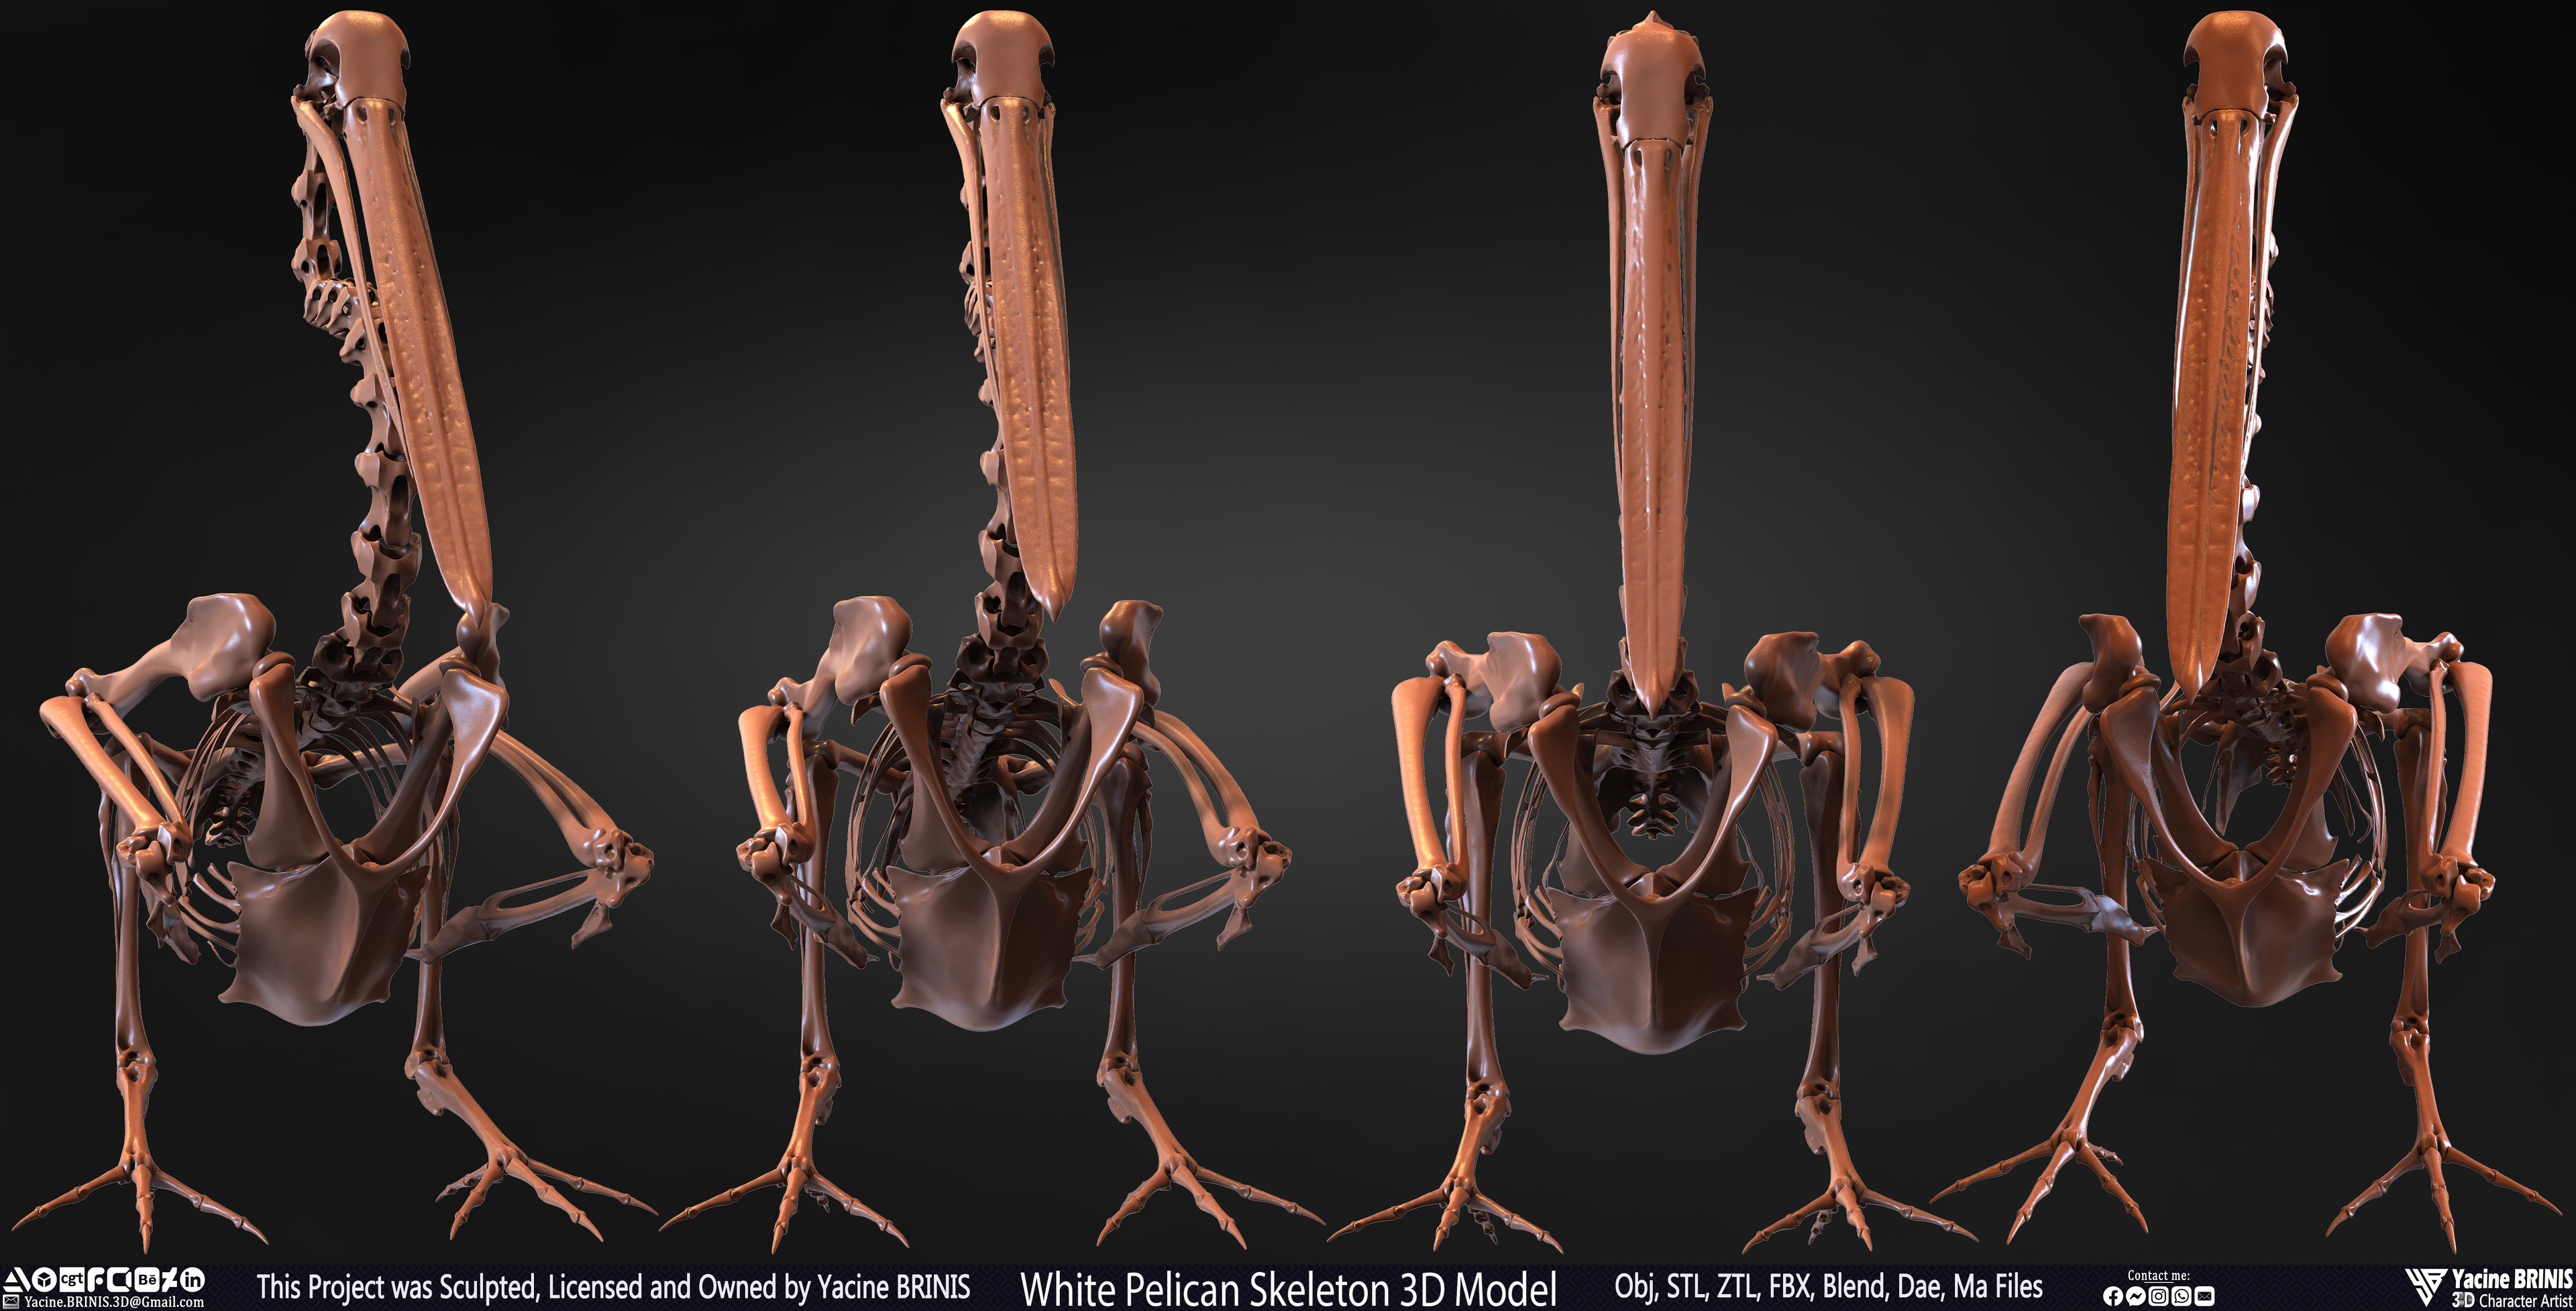 White Pelican Skeleton 3D Model Sculpted by Yacine BRINIS Set 003